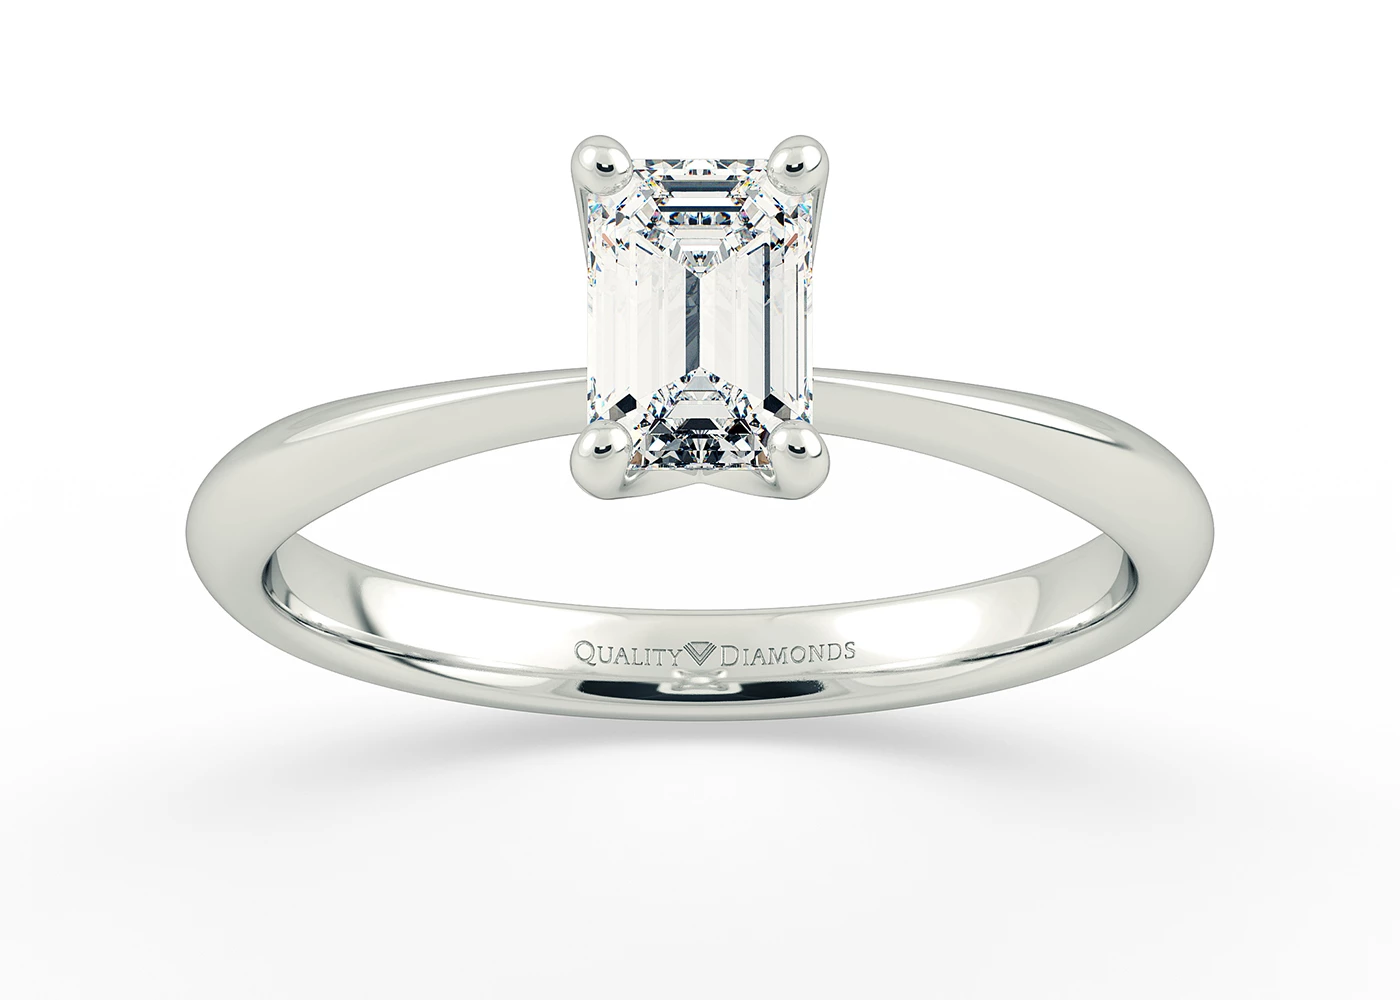 Emerald Amorette Diamond Ring in 18K White Gold